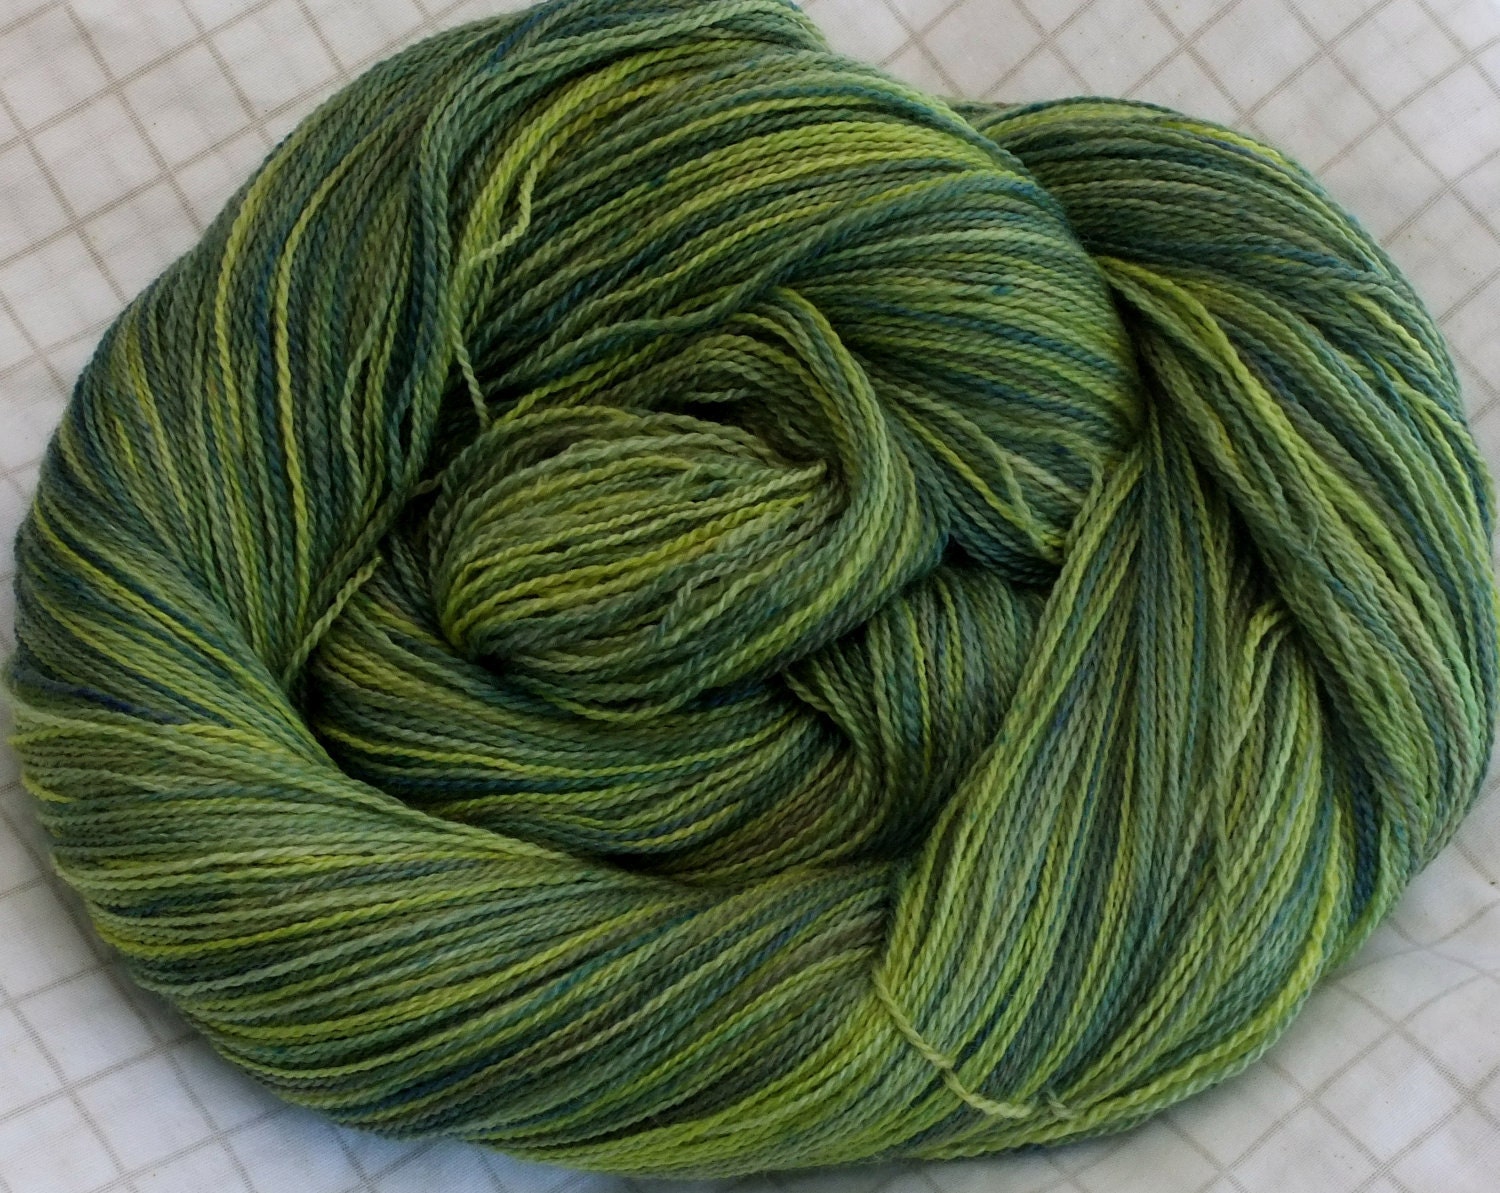 Fields - Hand Dyed Lace Merino/SilkYarn - 100g/875yards